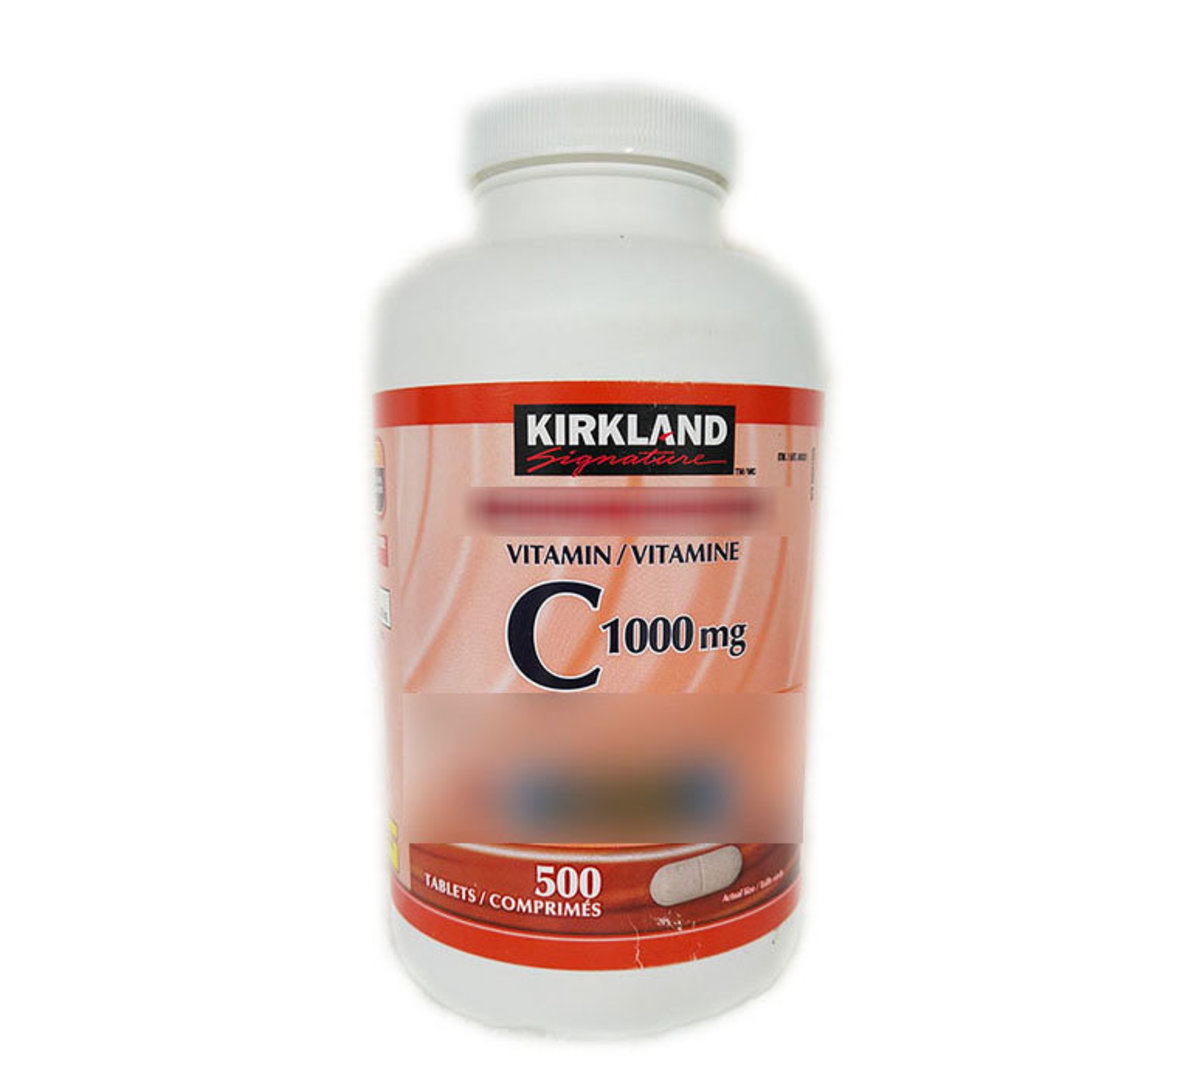 Kirkland Signature Vitamin C 1000mg 500 Tabs Parallel Import Hktvmall The Largest Hk Shopping Platform